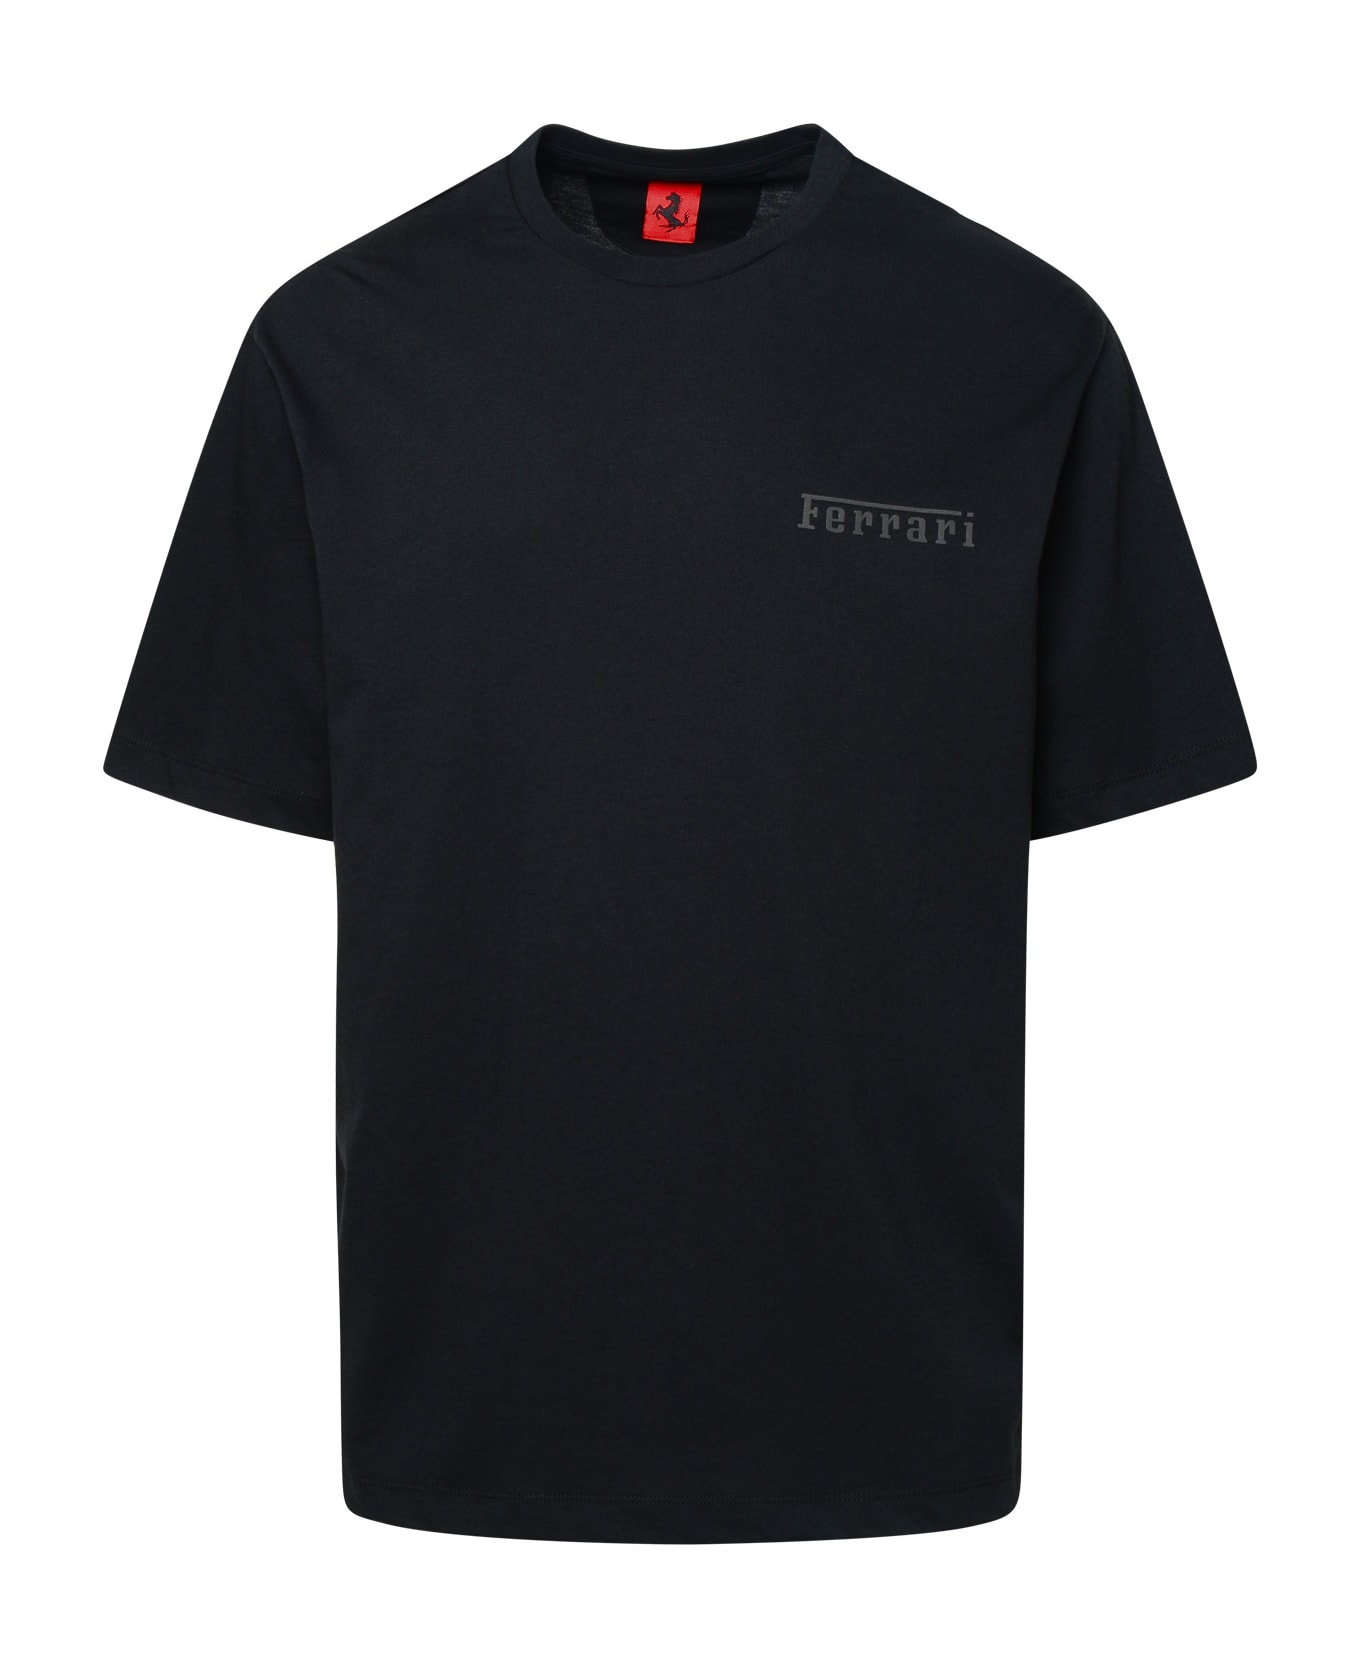 Ferrari Black Cotton T-shirt - Black シャツ